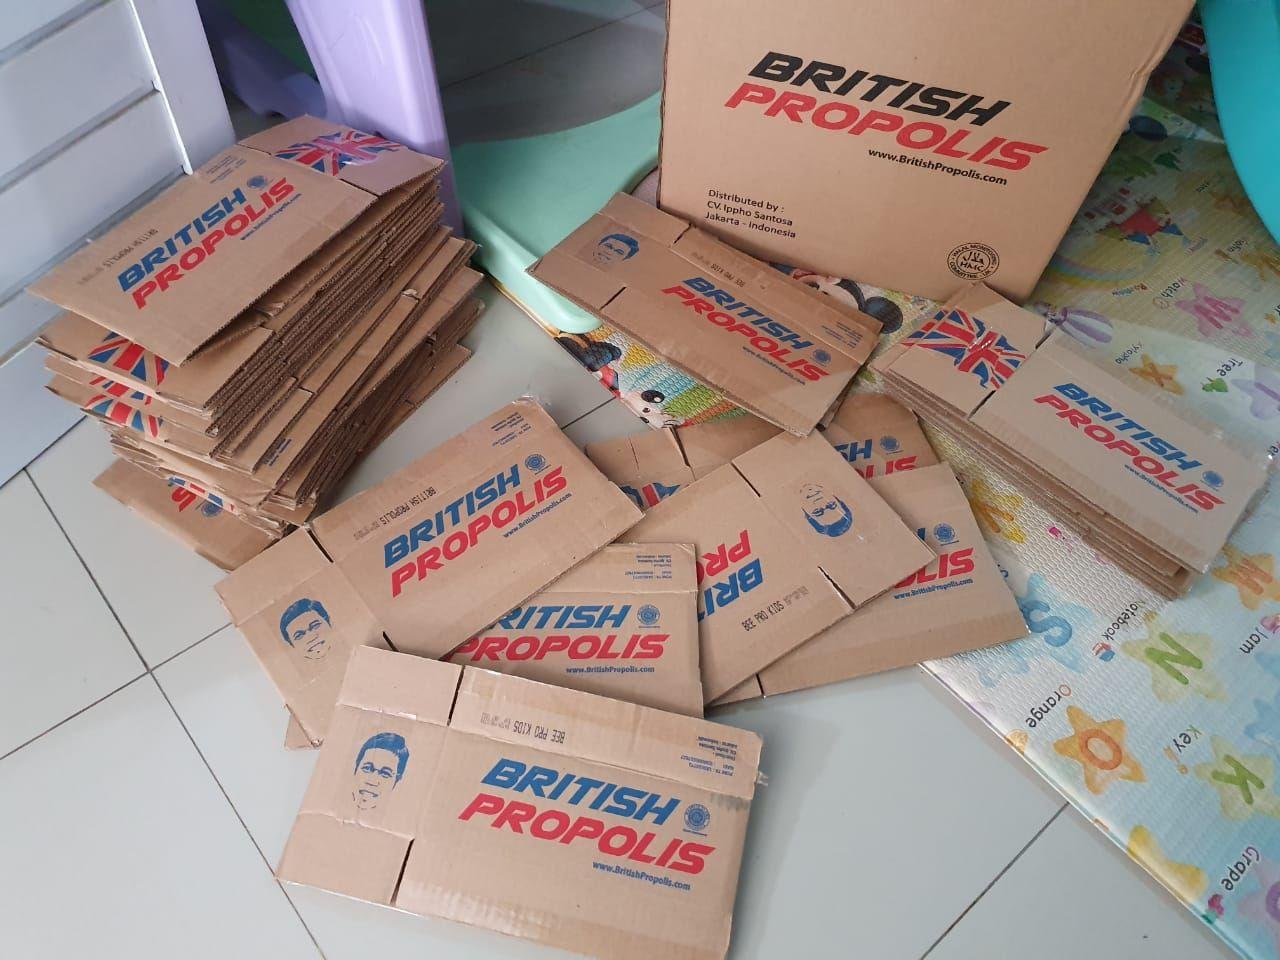 distributor british propolis